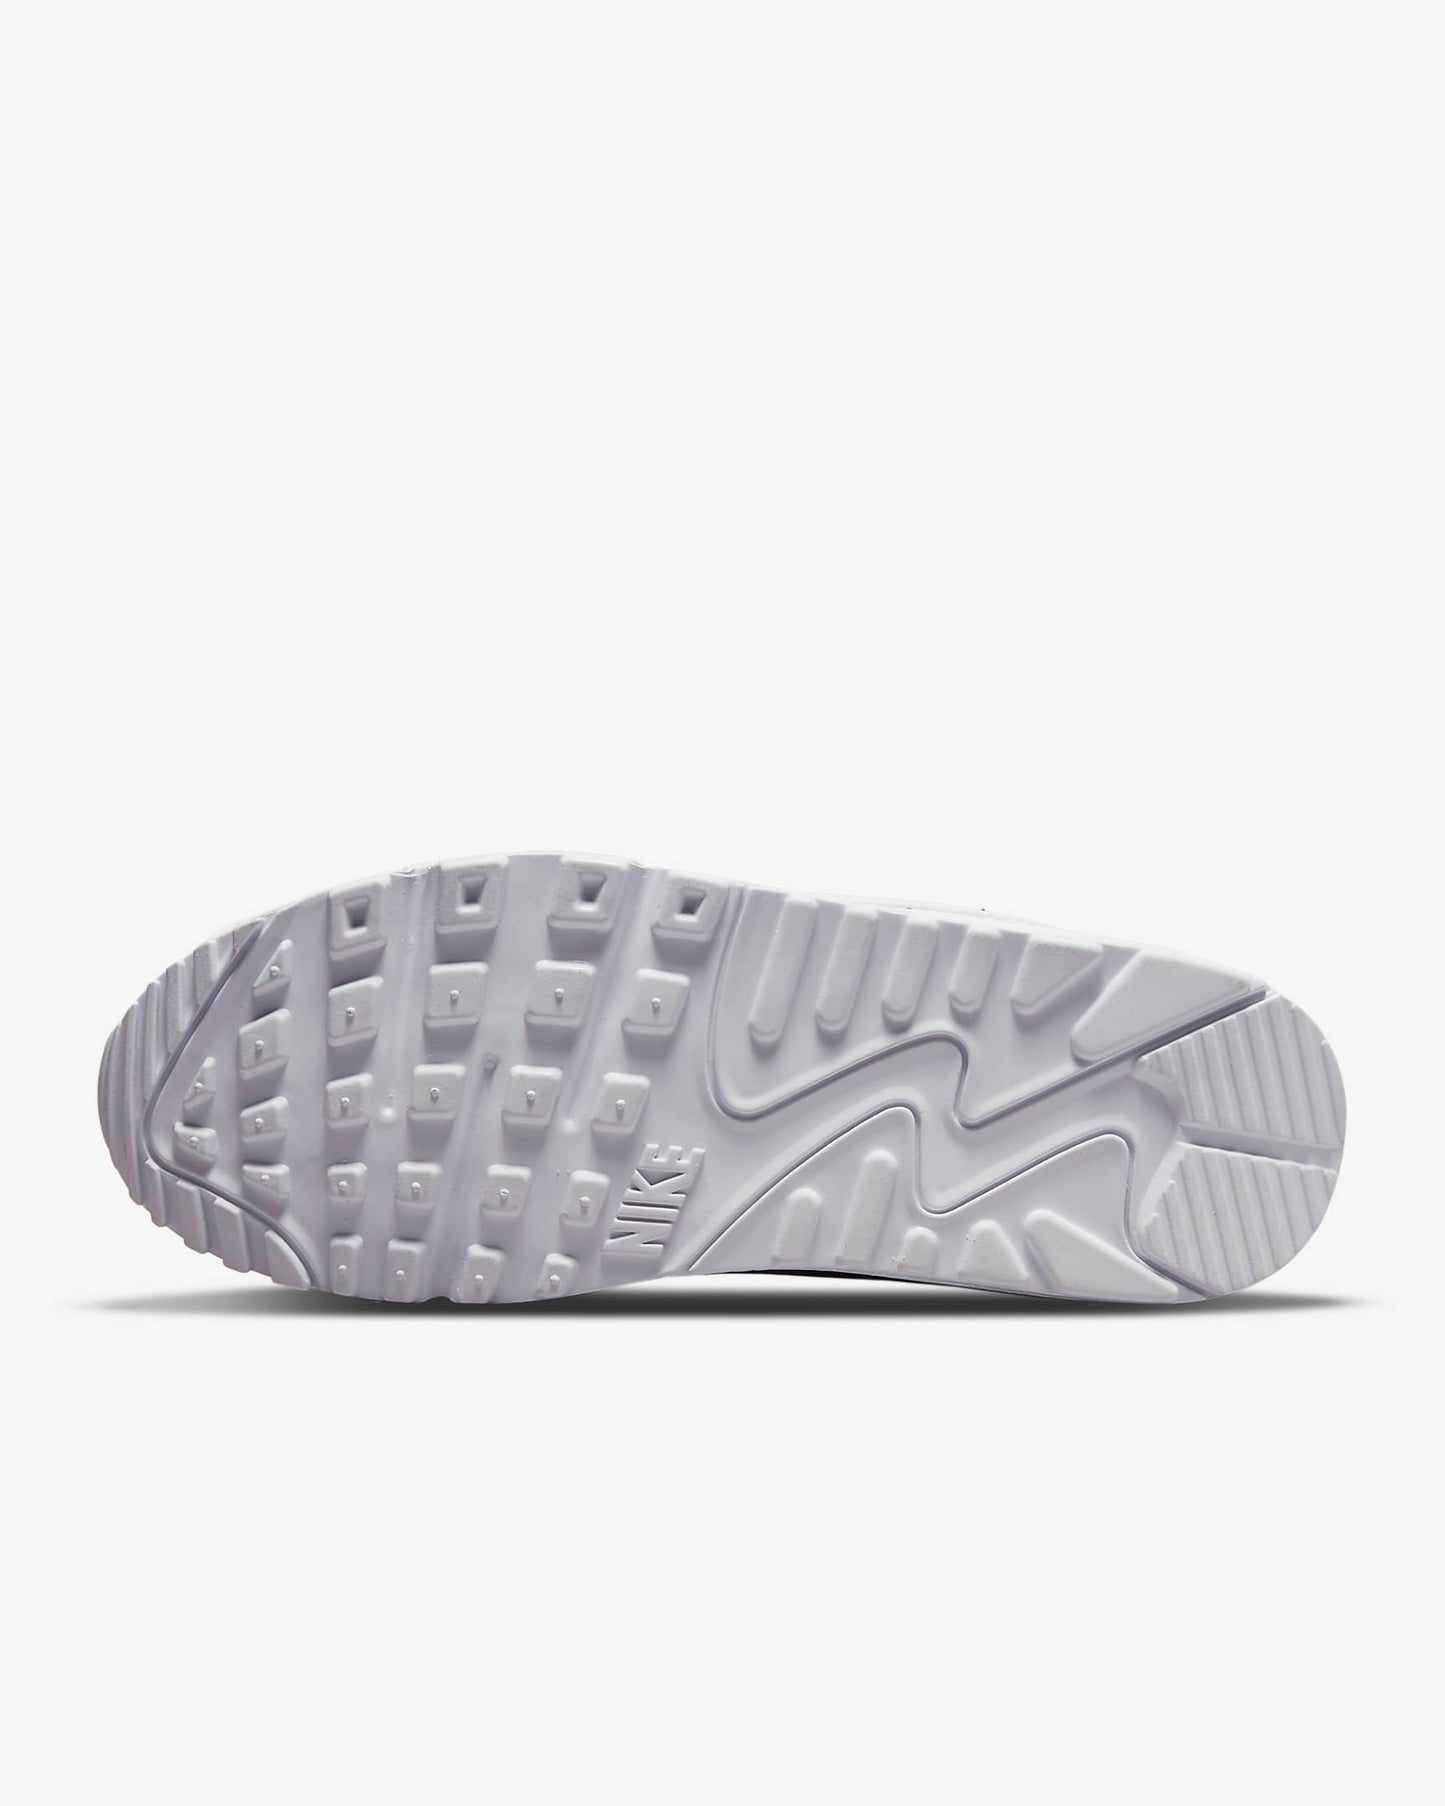 Nike Air Max 90 Women's Shoes, White/White/Black